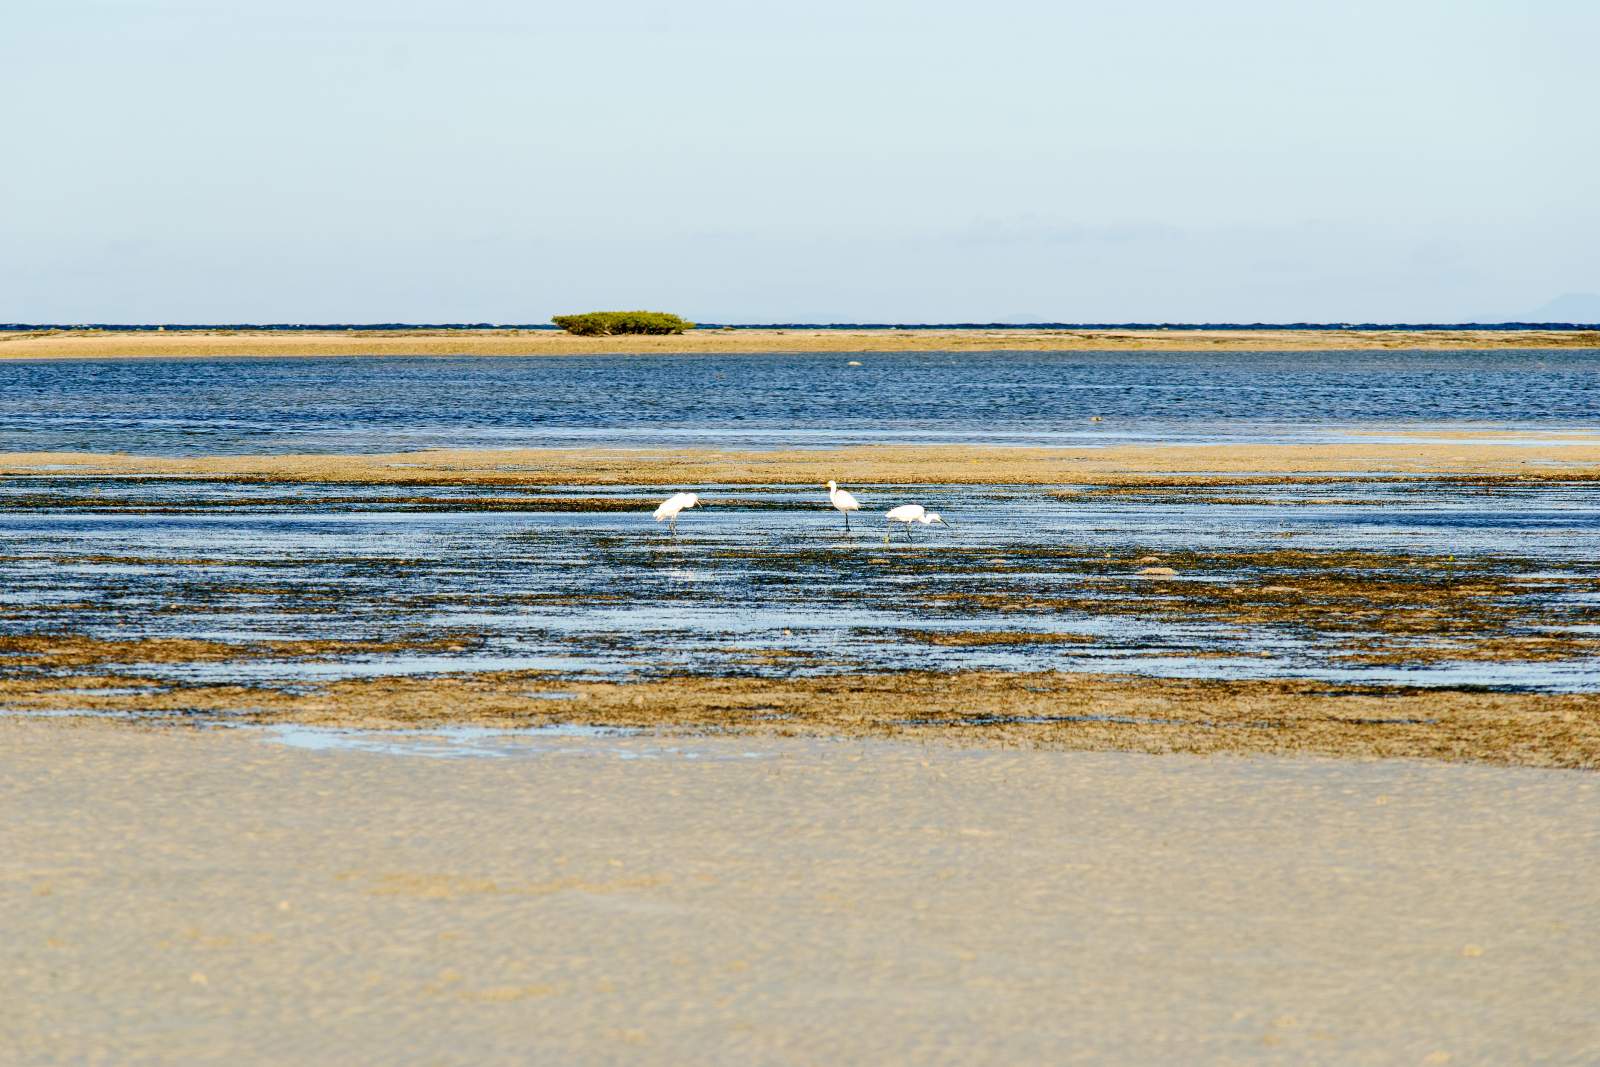 Cagbalete Island Tagak birds and Bonsai Island on the horizon